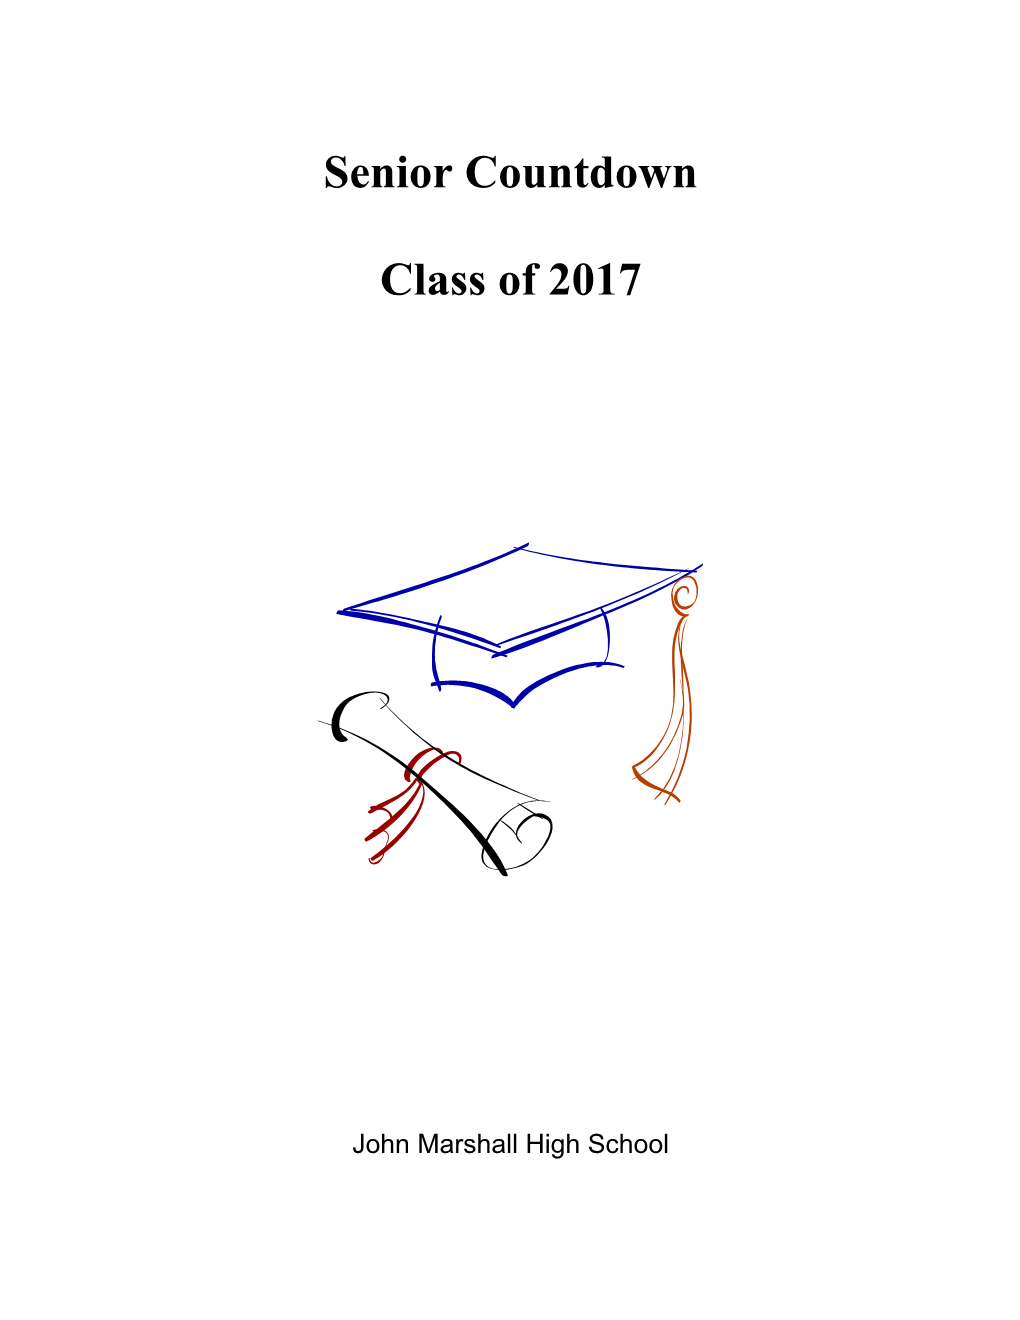 John Marshall High School Senior Countdown